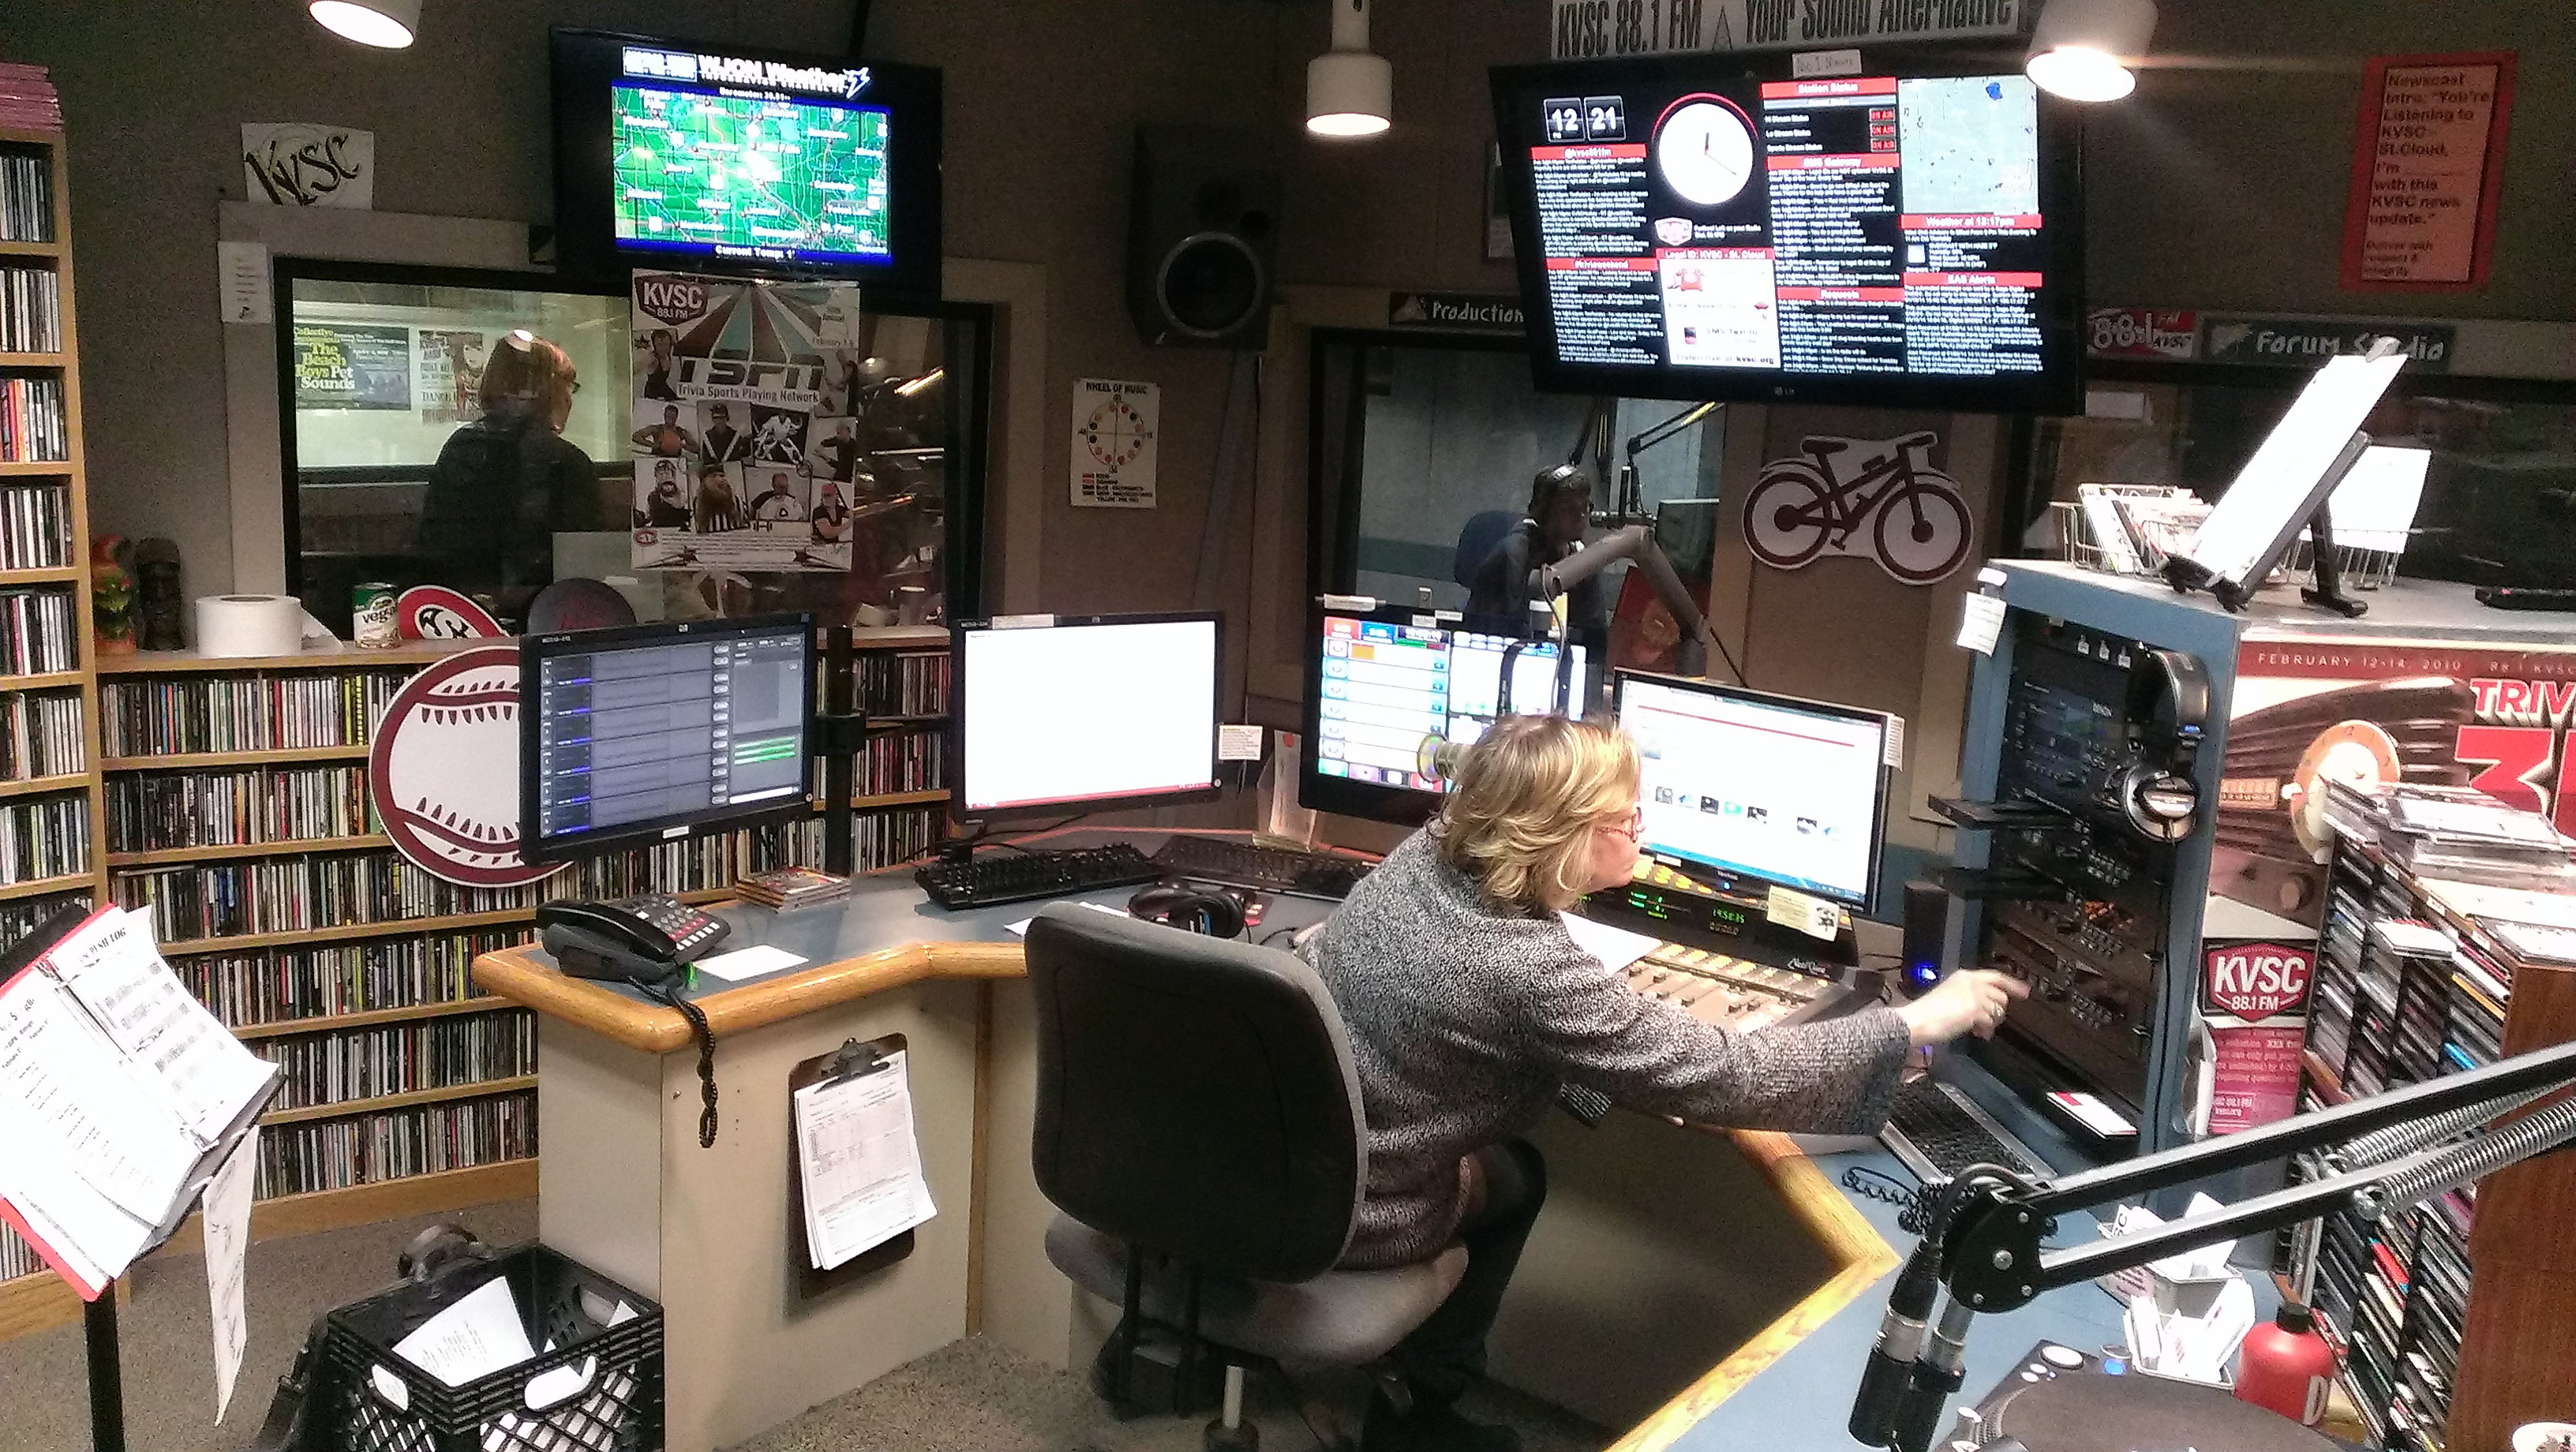 KVSC Radio in St. Cloud. Bob Collins/MPR News